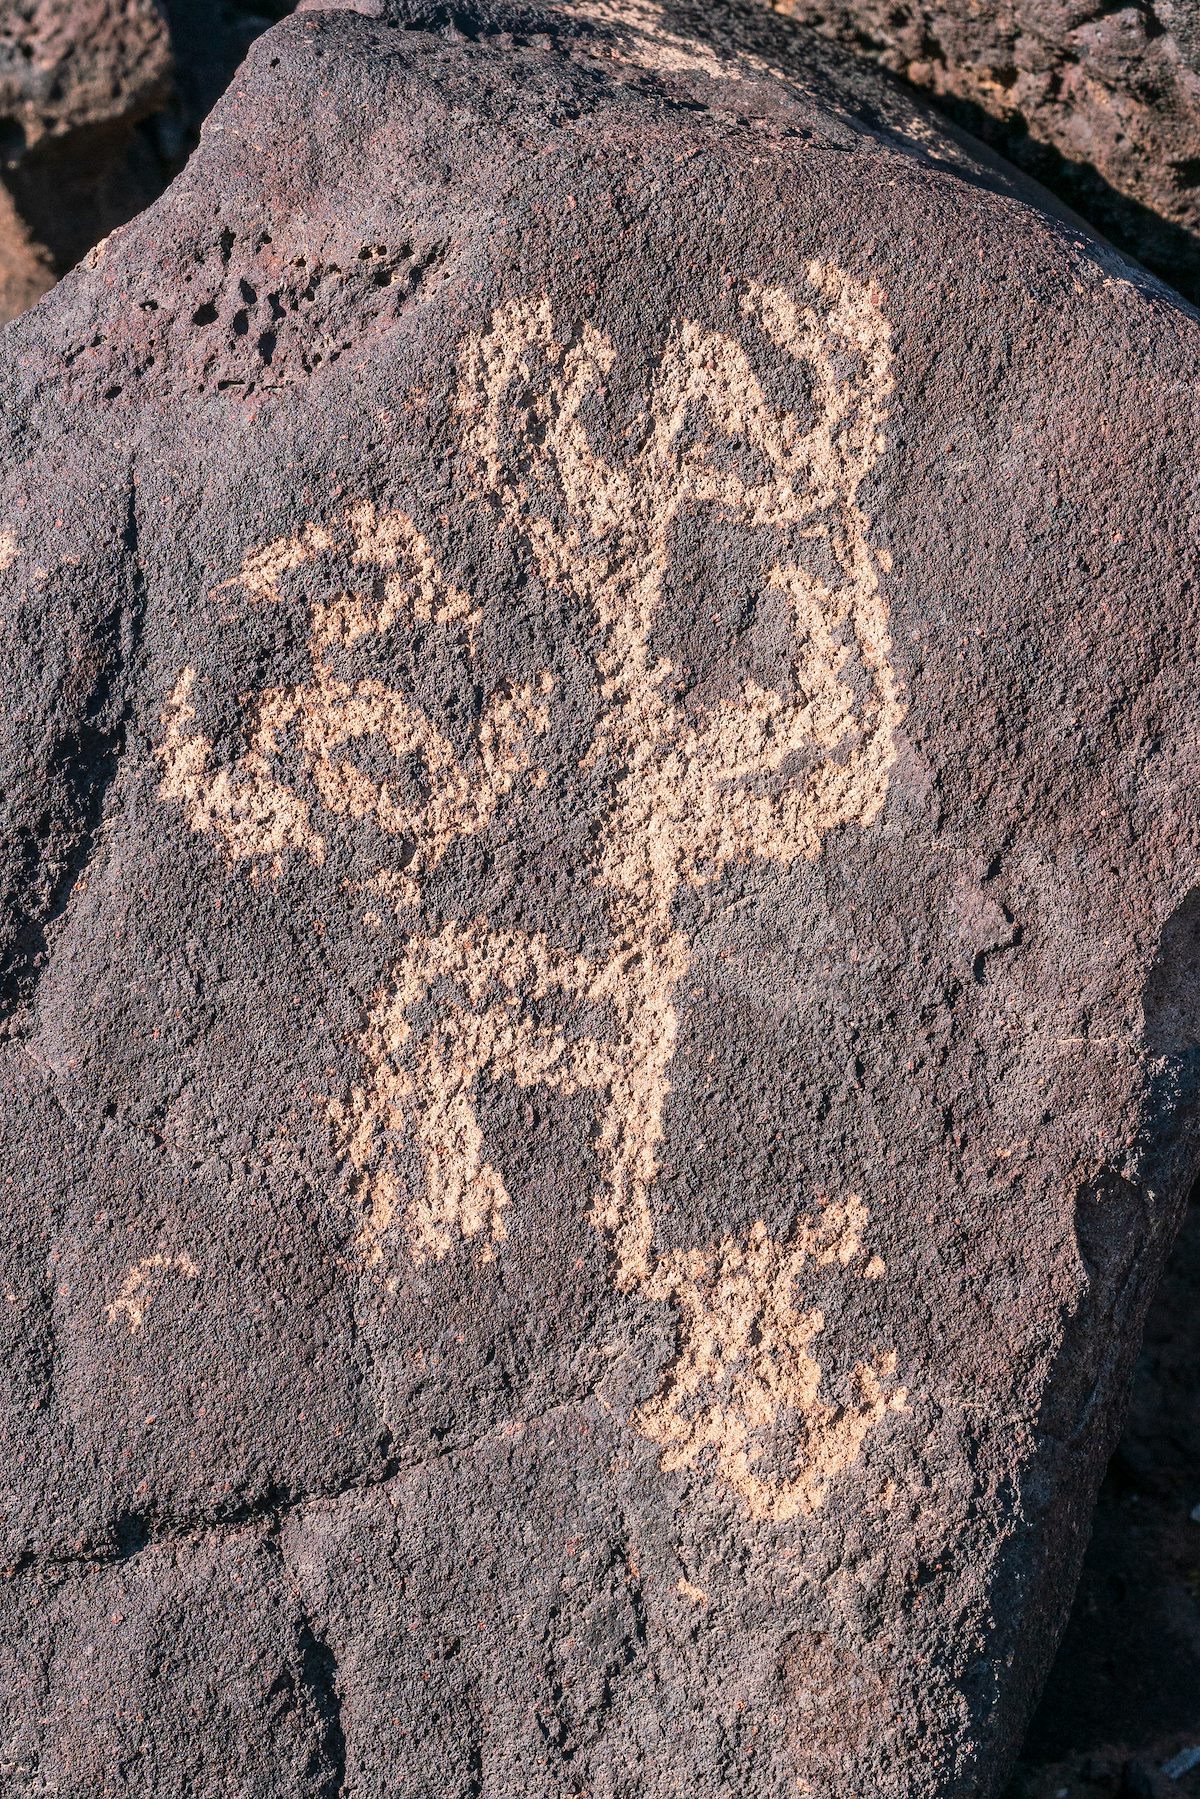 2018 May Inscription Hill Petroglyphs-14